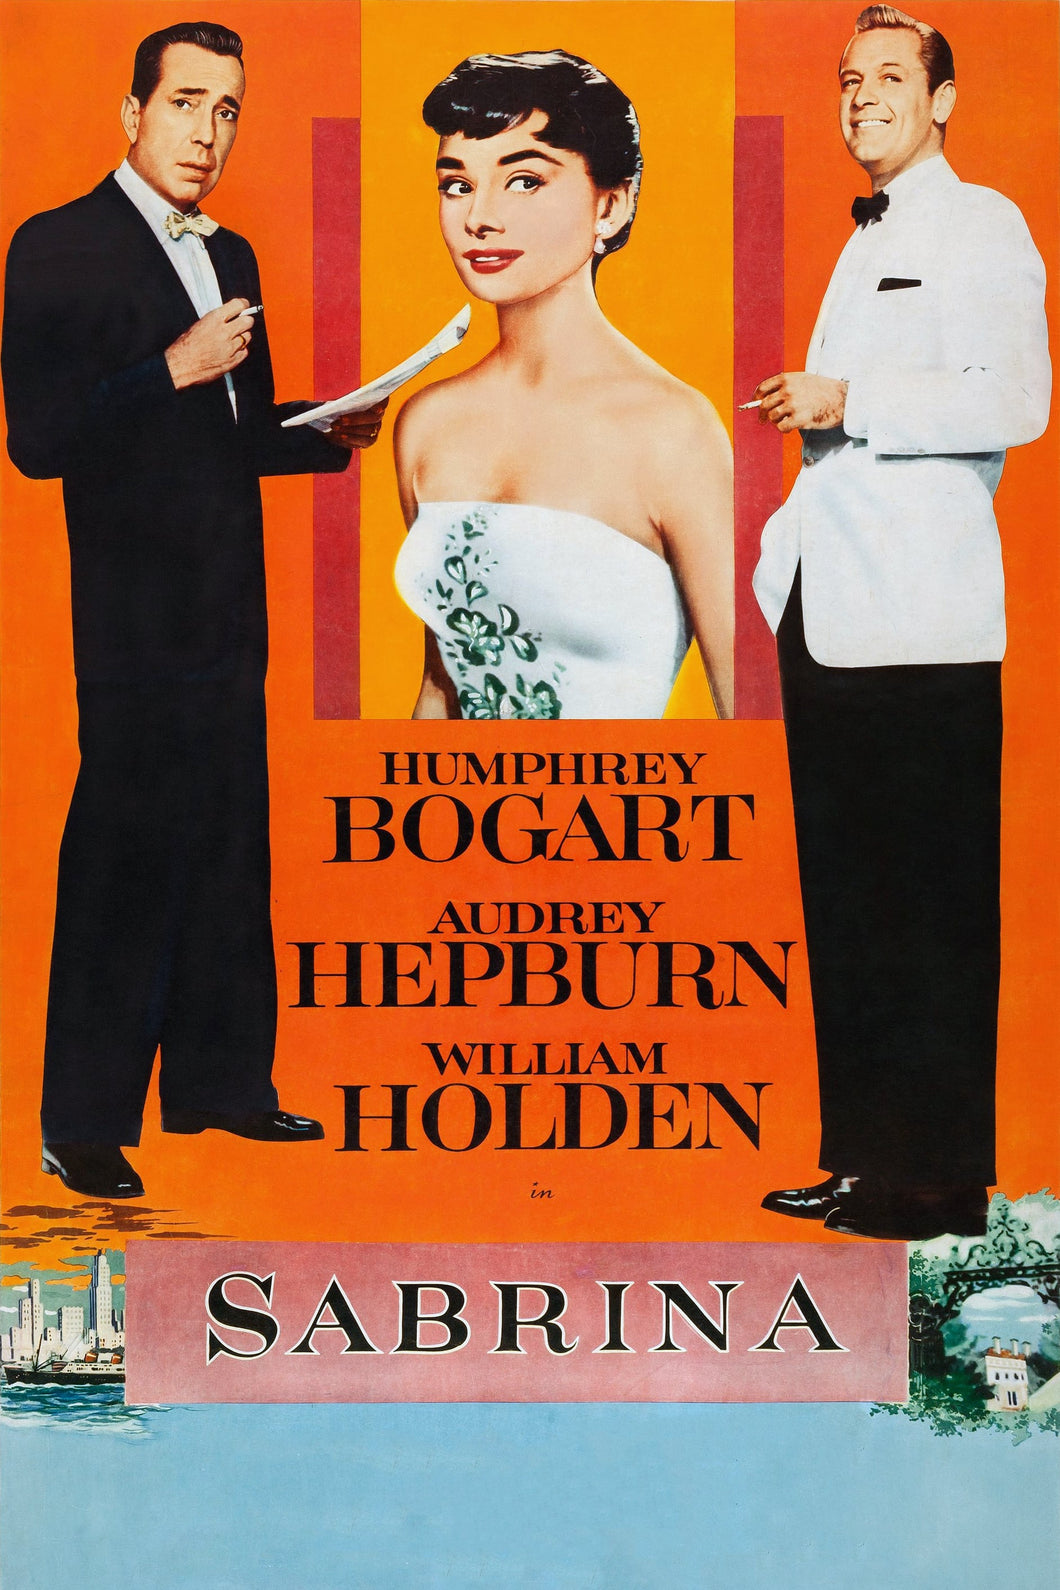 Sabrina (1954) Movie Poster High Quality Glossy Paper A1 A2 A3 A4 A3 Framed or Unframed!!